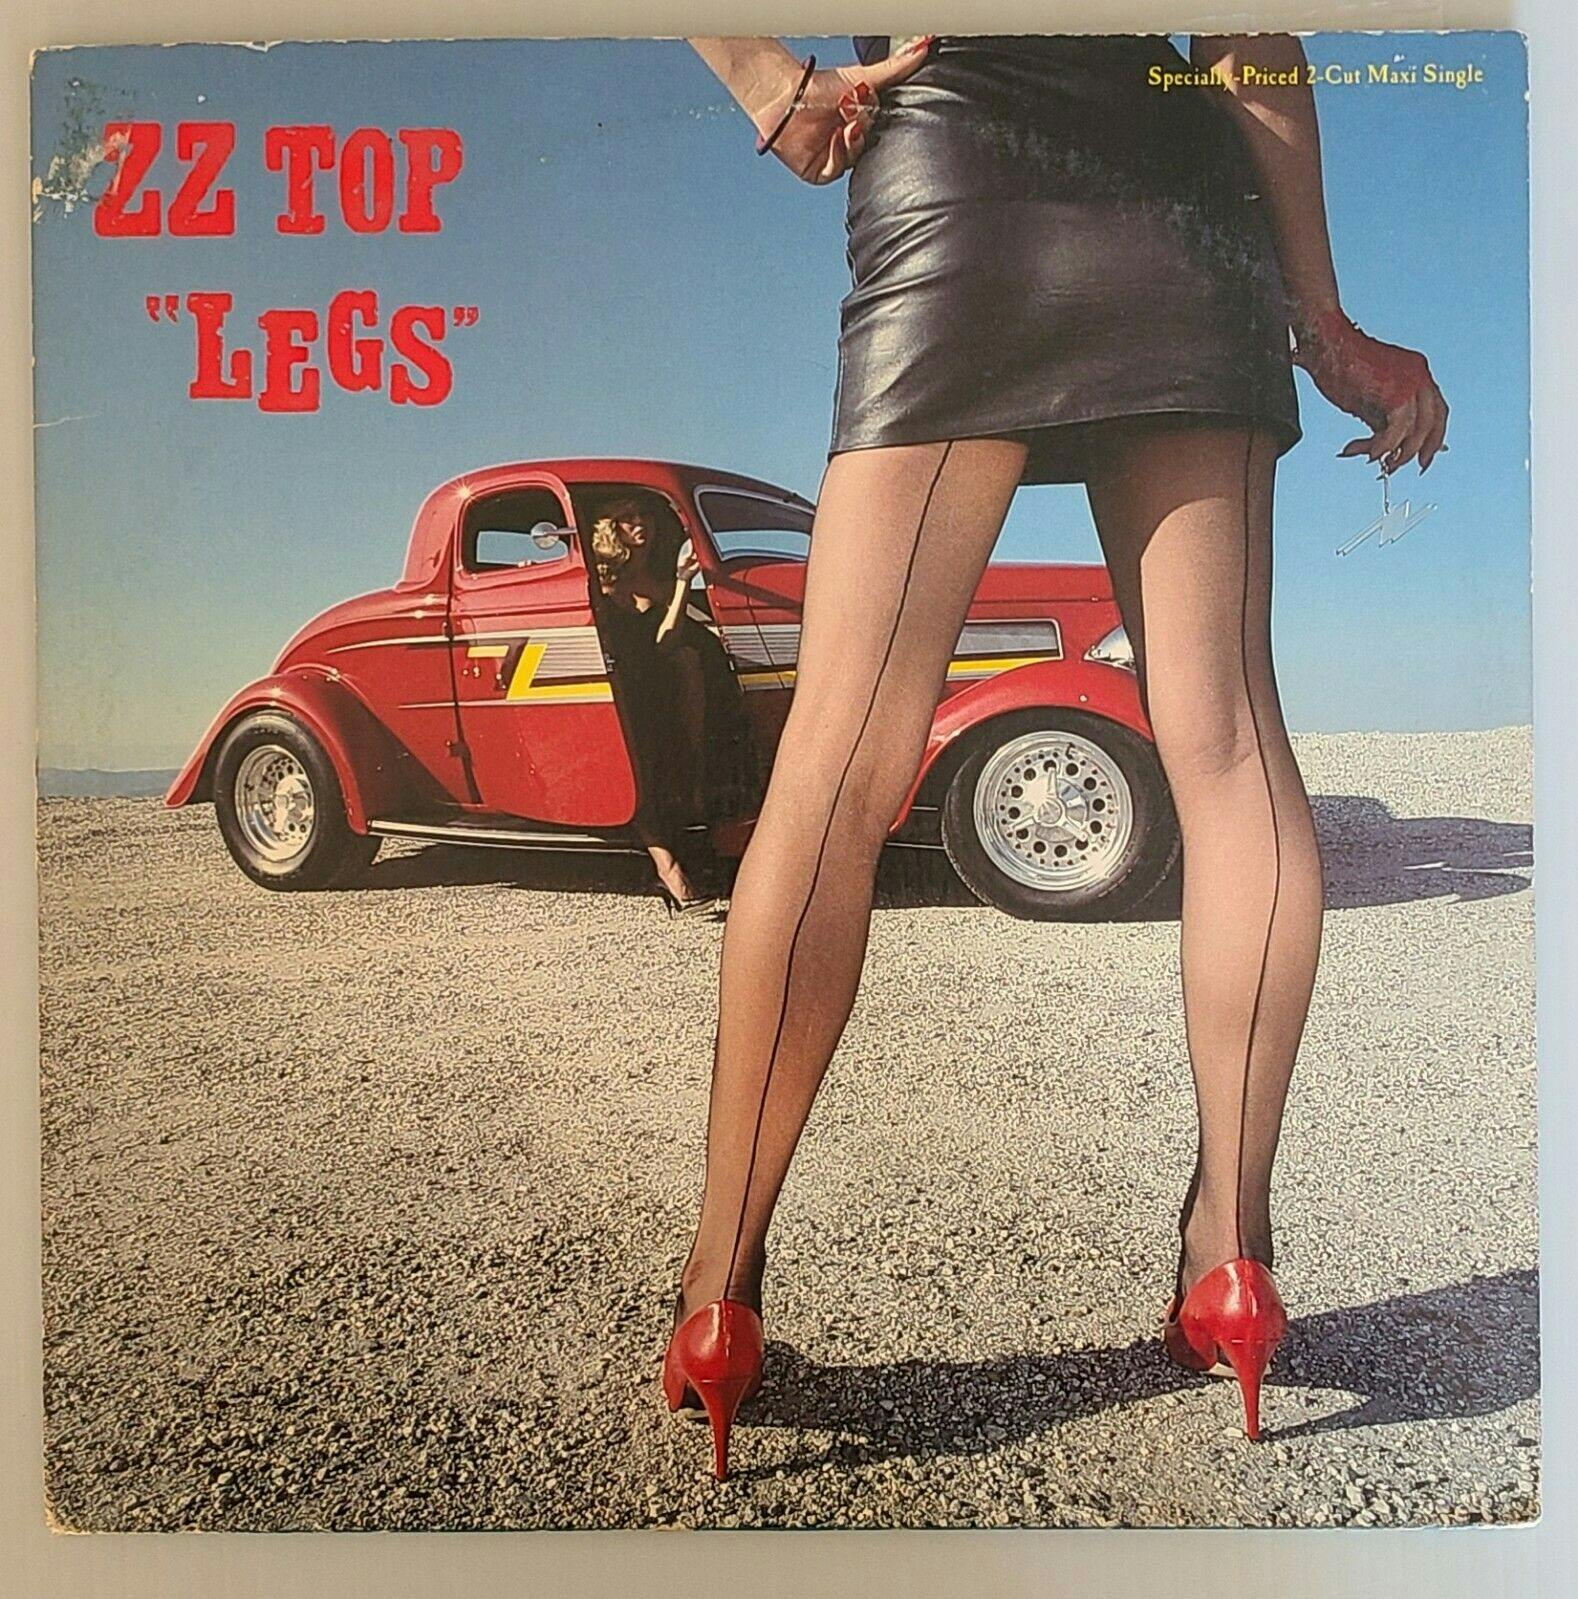 zz top album cover hot legs eliminator coupe